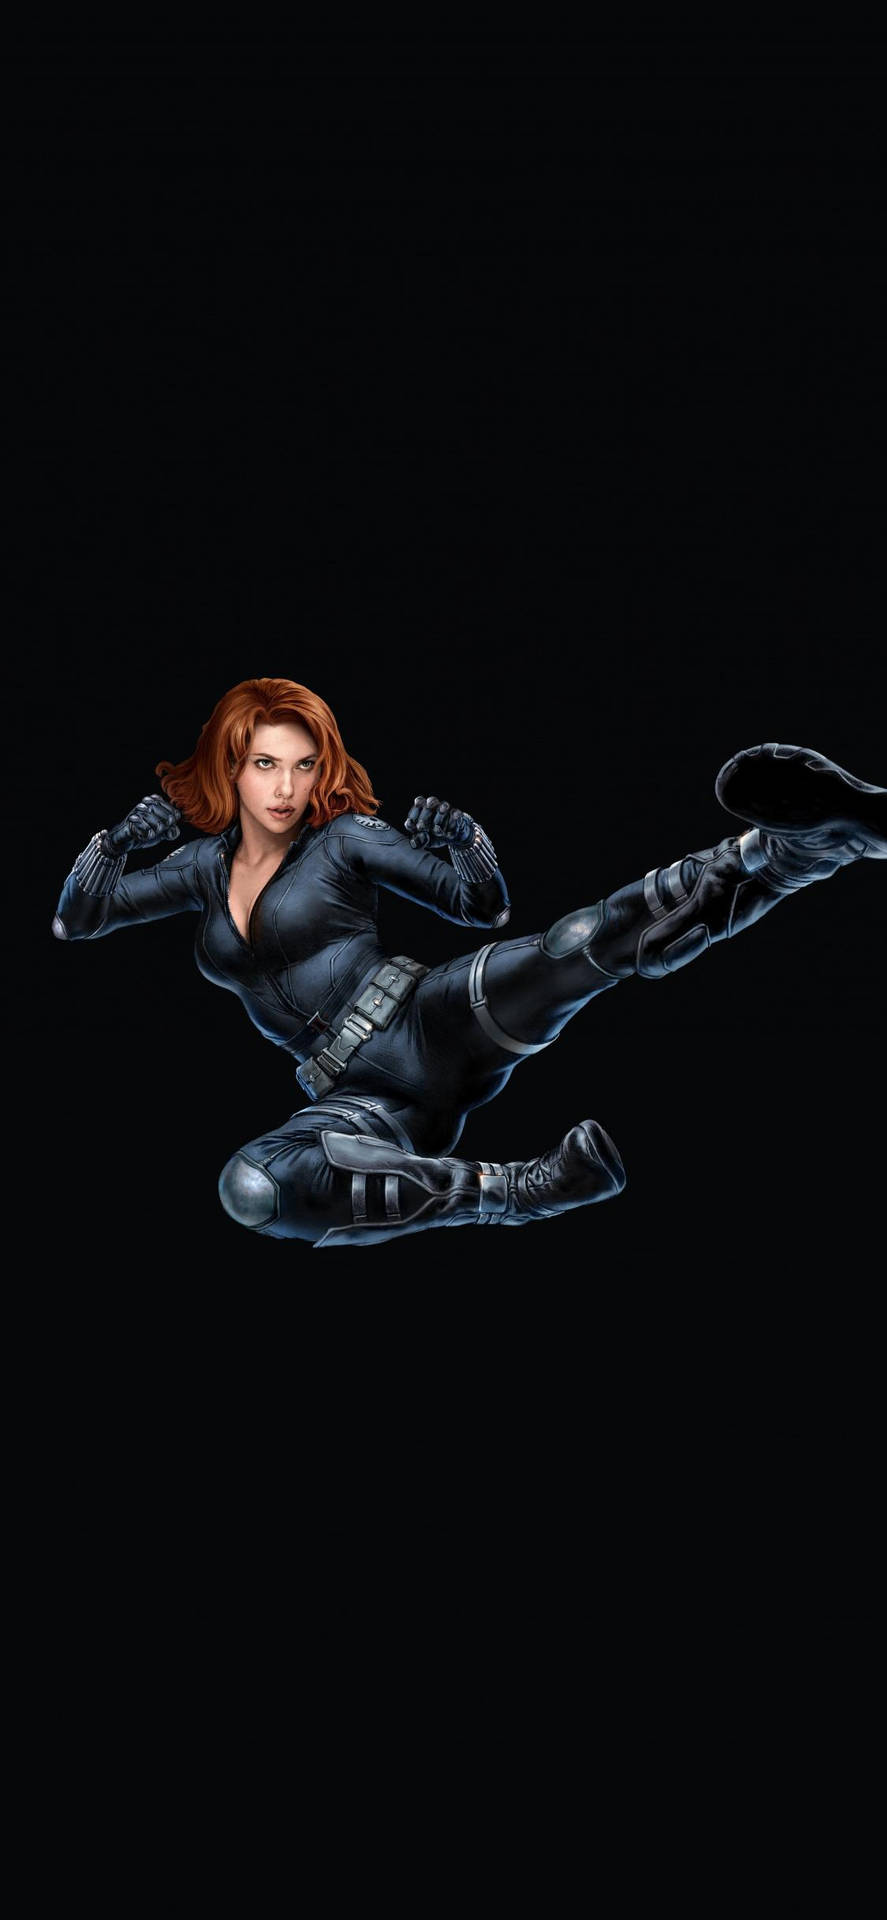 Black Widow Marvel iPhone X Wallpaper